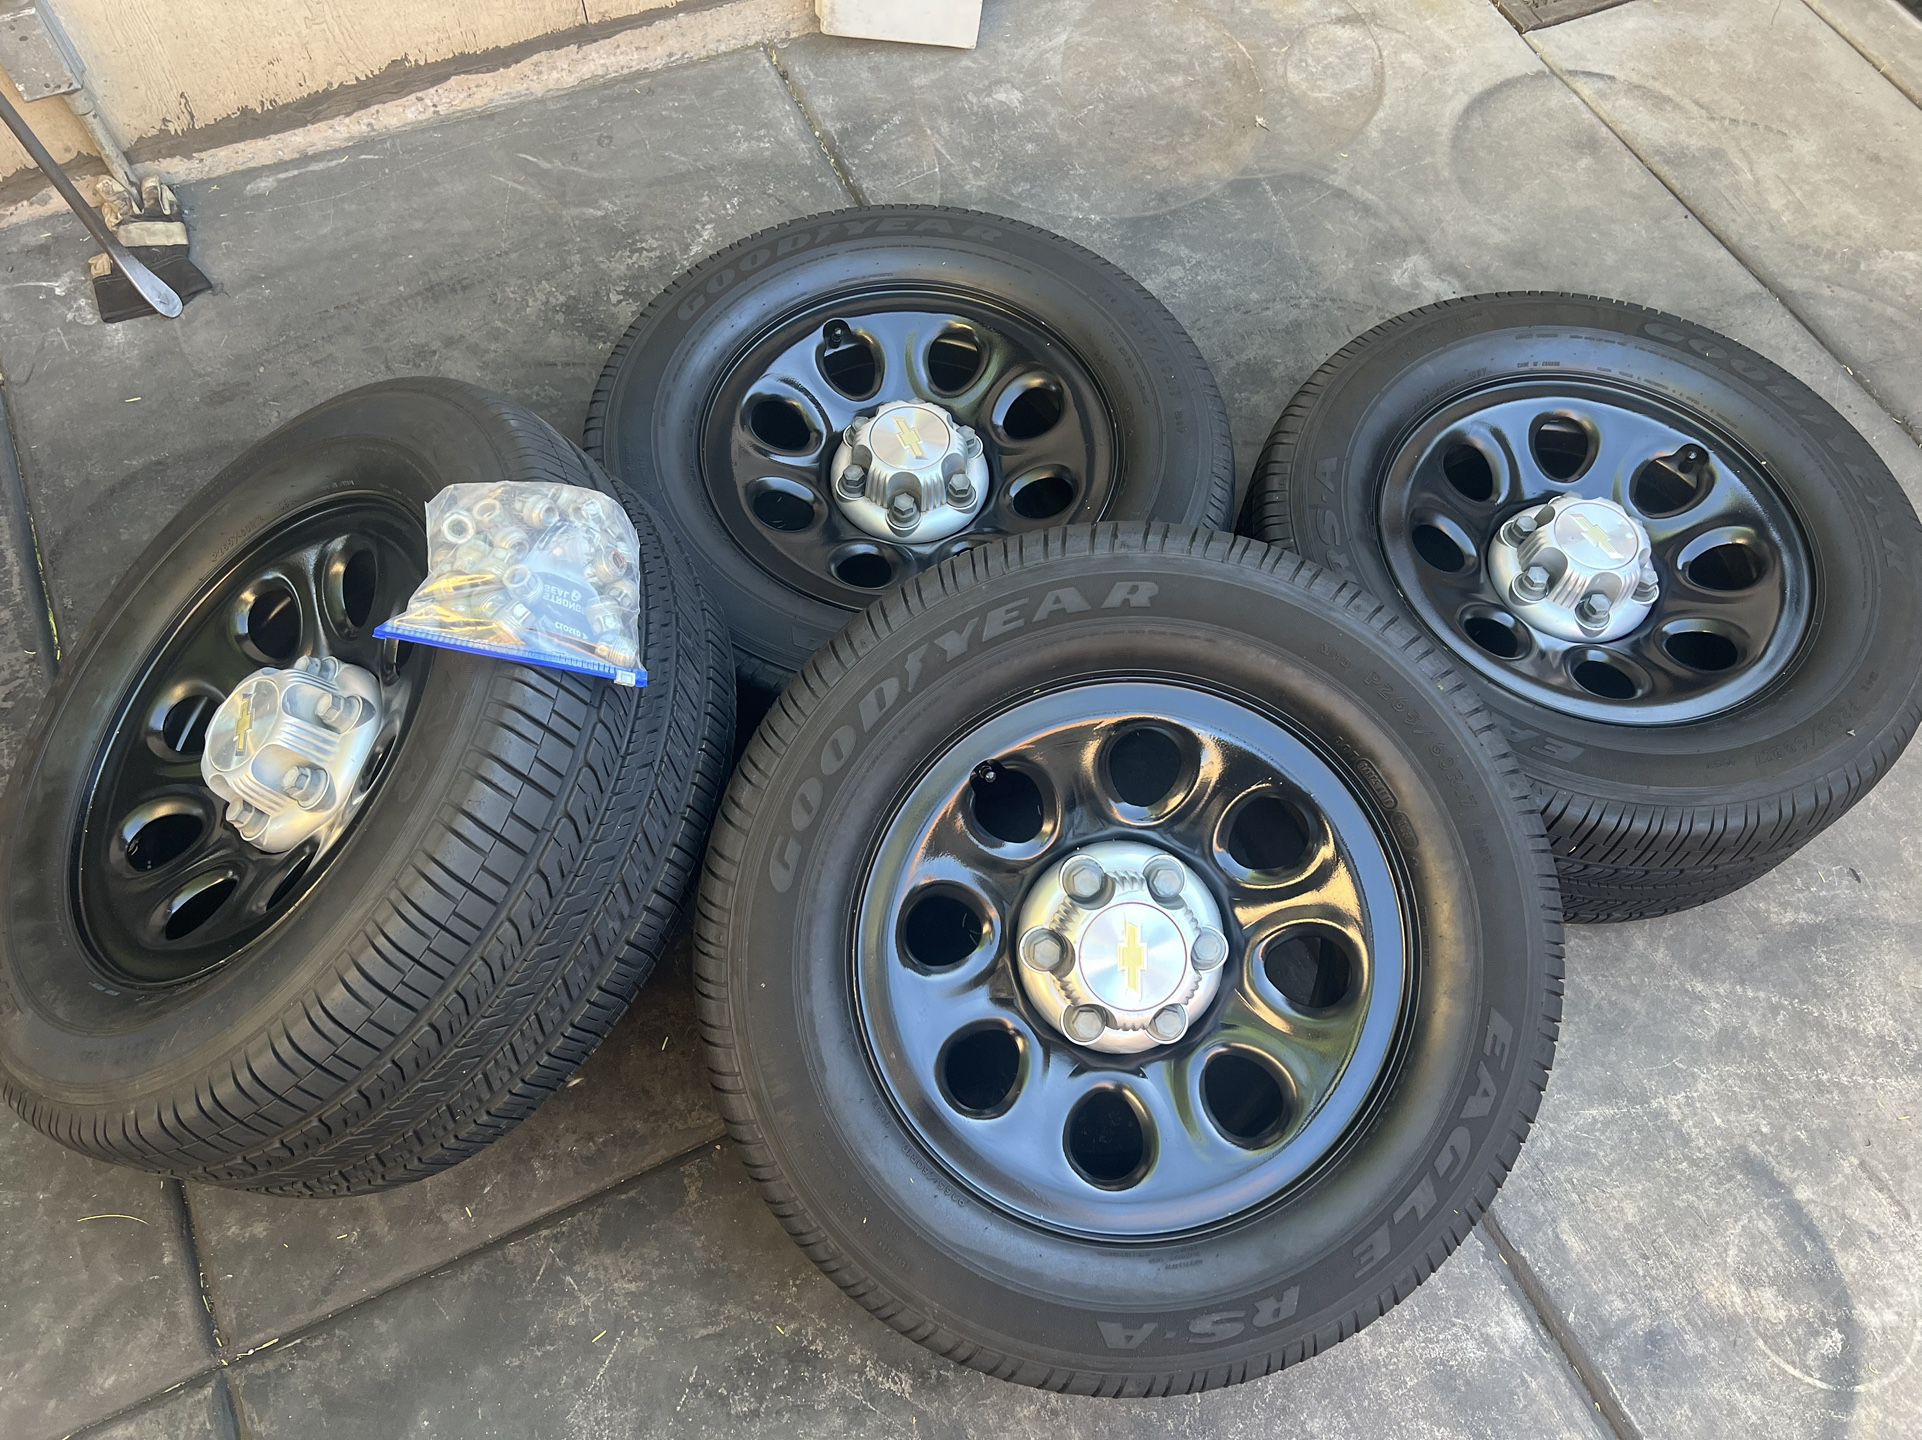 P265/60/R17 Goodyear Eagle Tires & Chevy Wheels (6) Lugs 